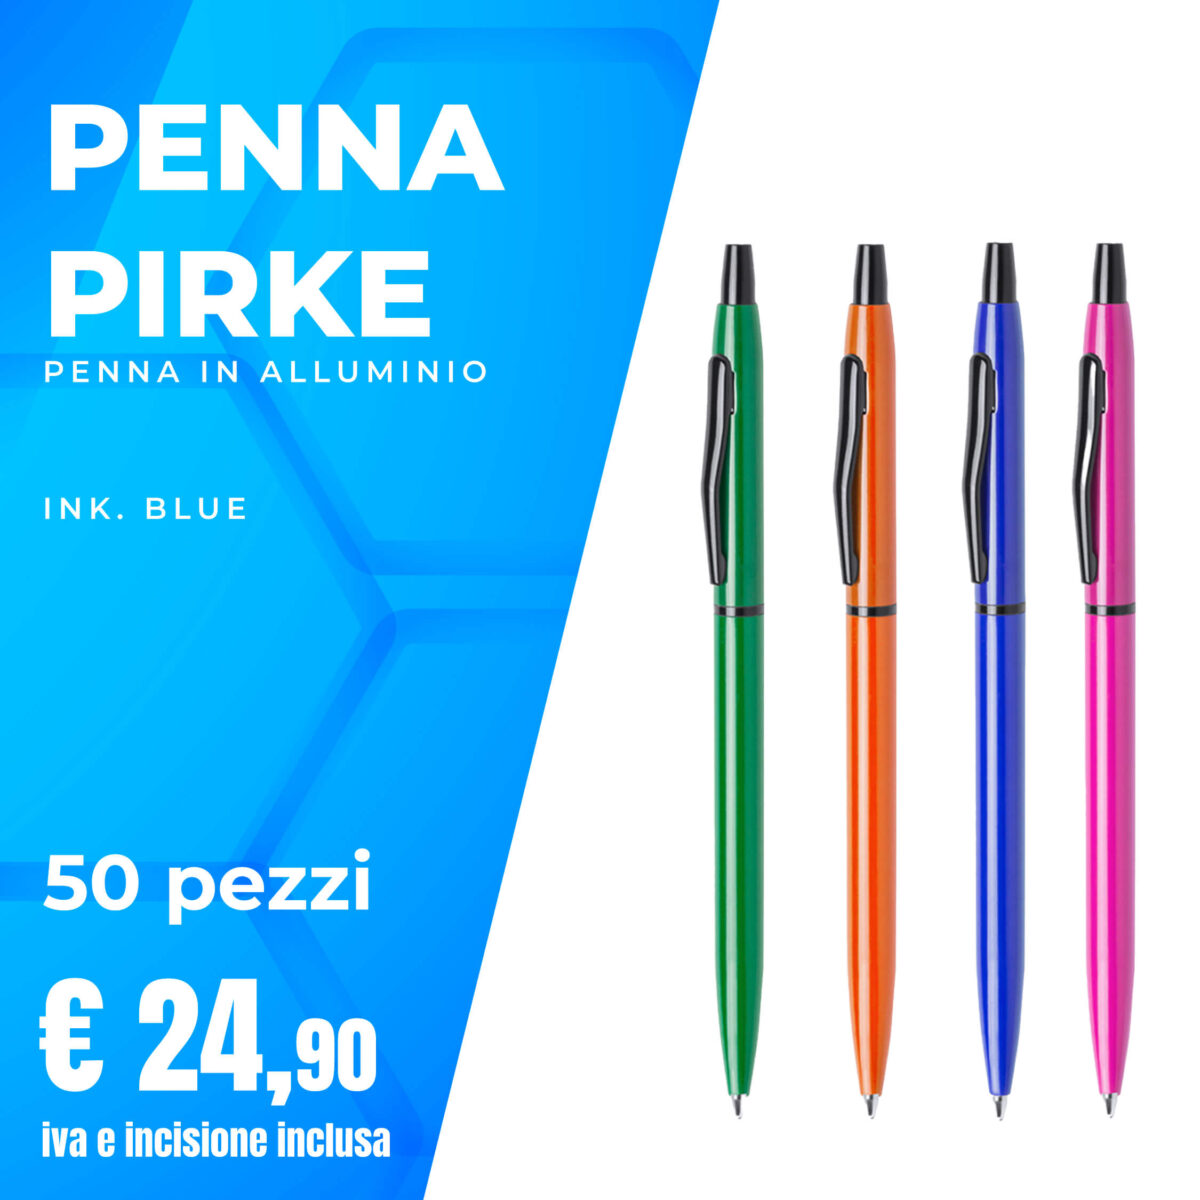 Penna Pirkle kit 50 pezzi